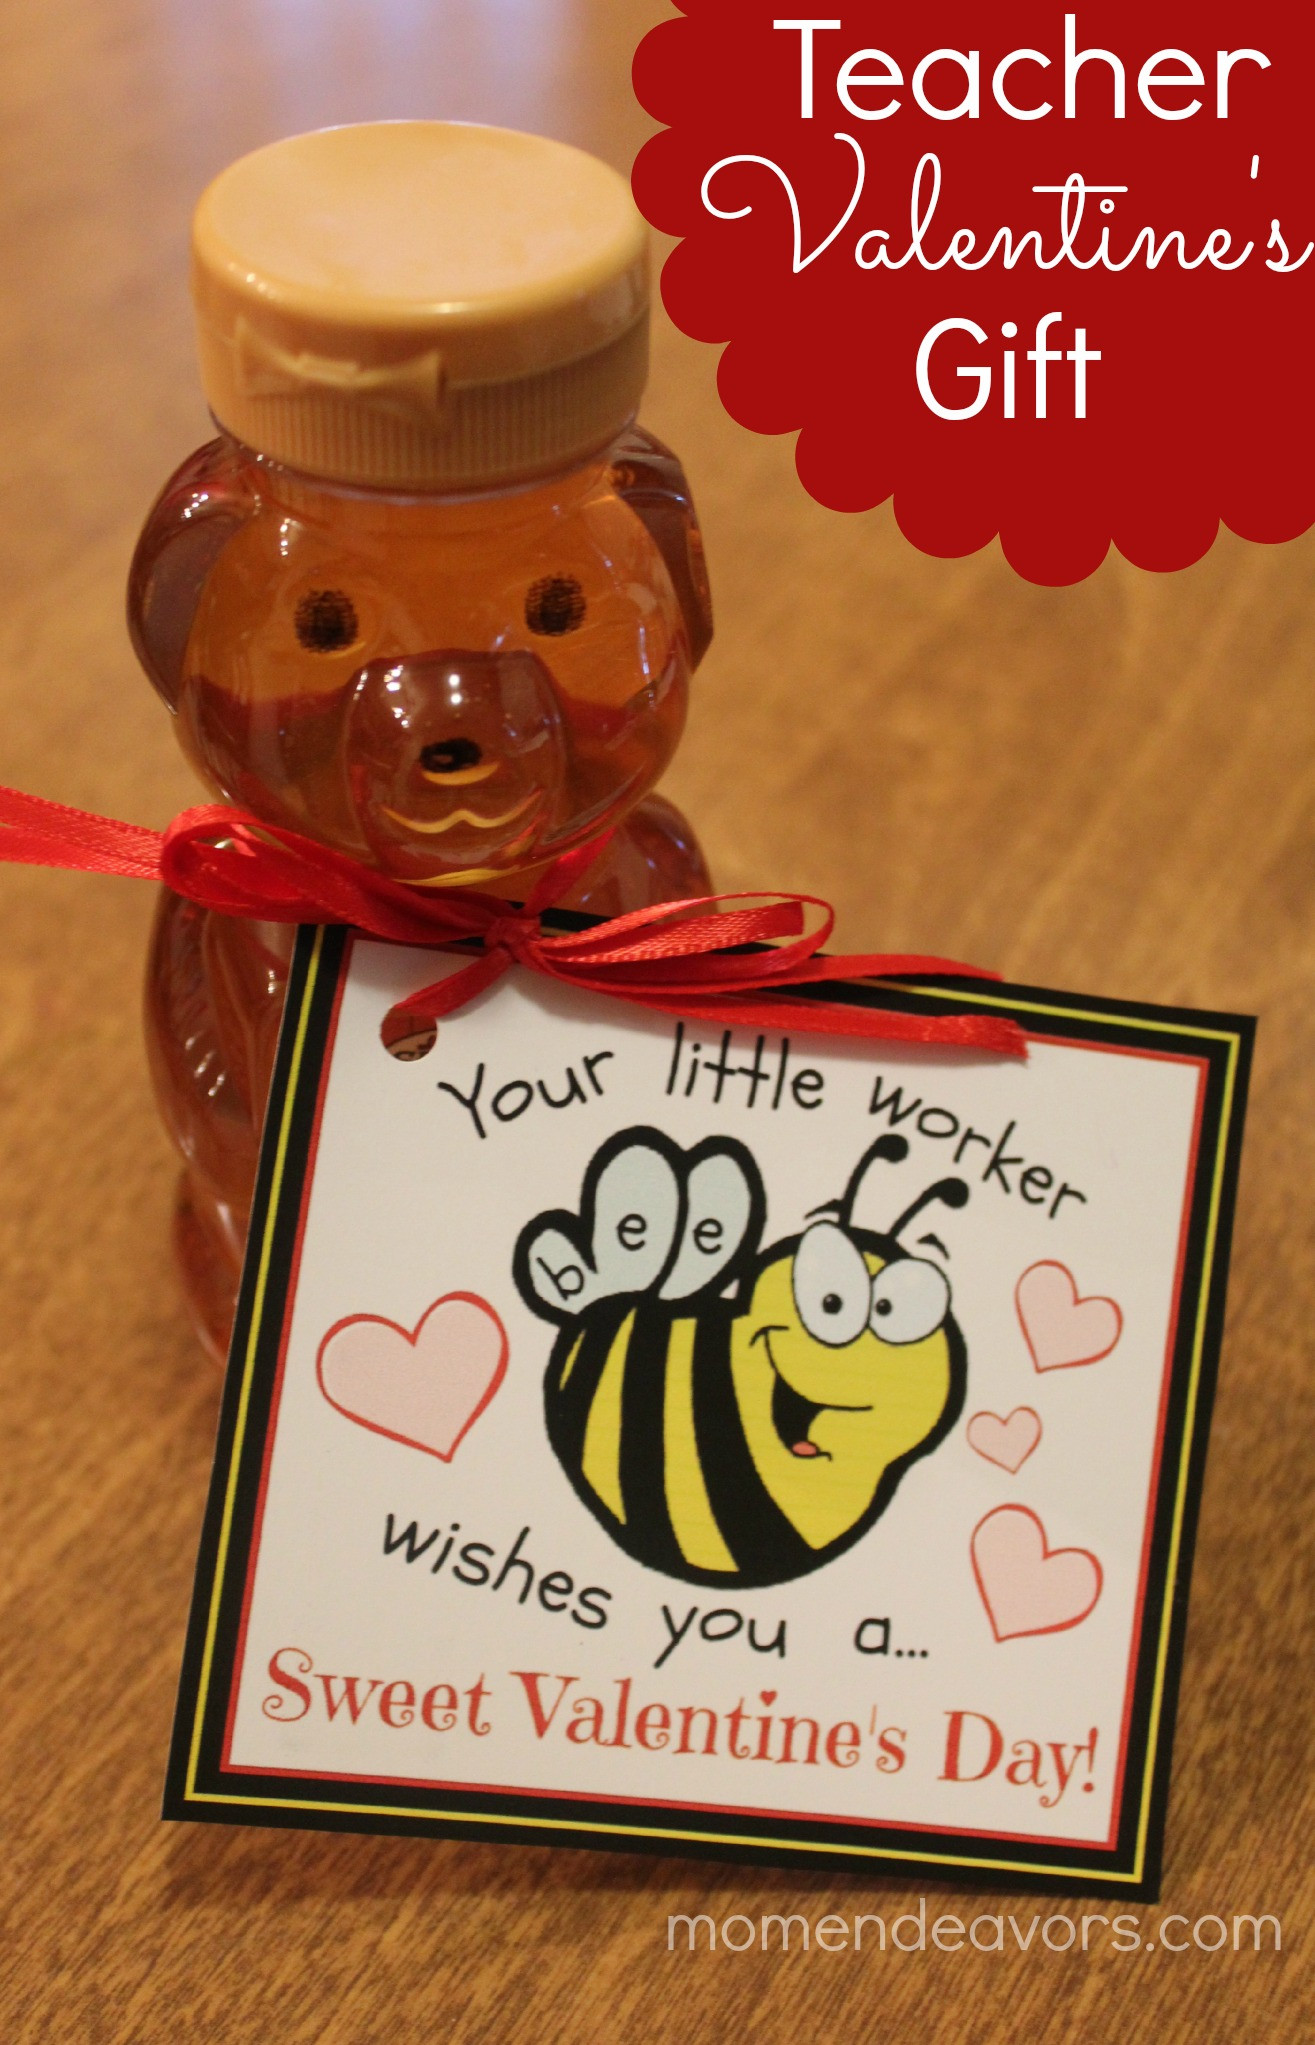 Valentine Gift Ideas For Teachers
 Bee themed Teacher Valentine’s Gift